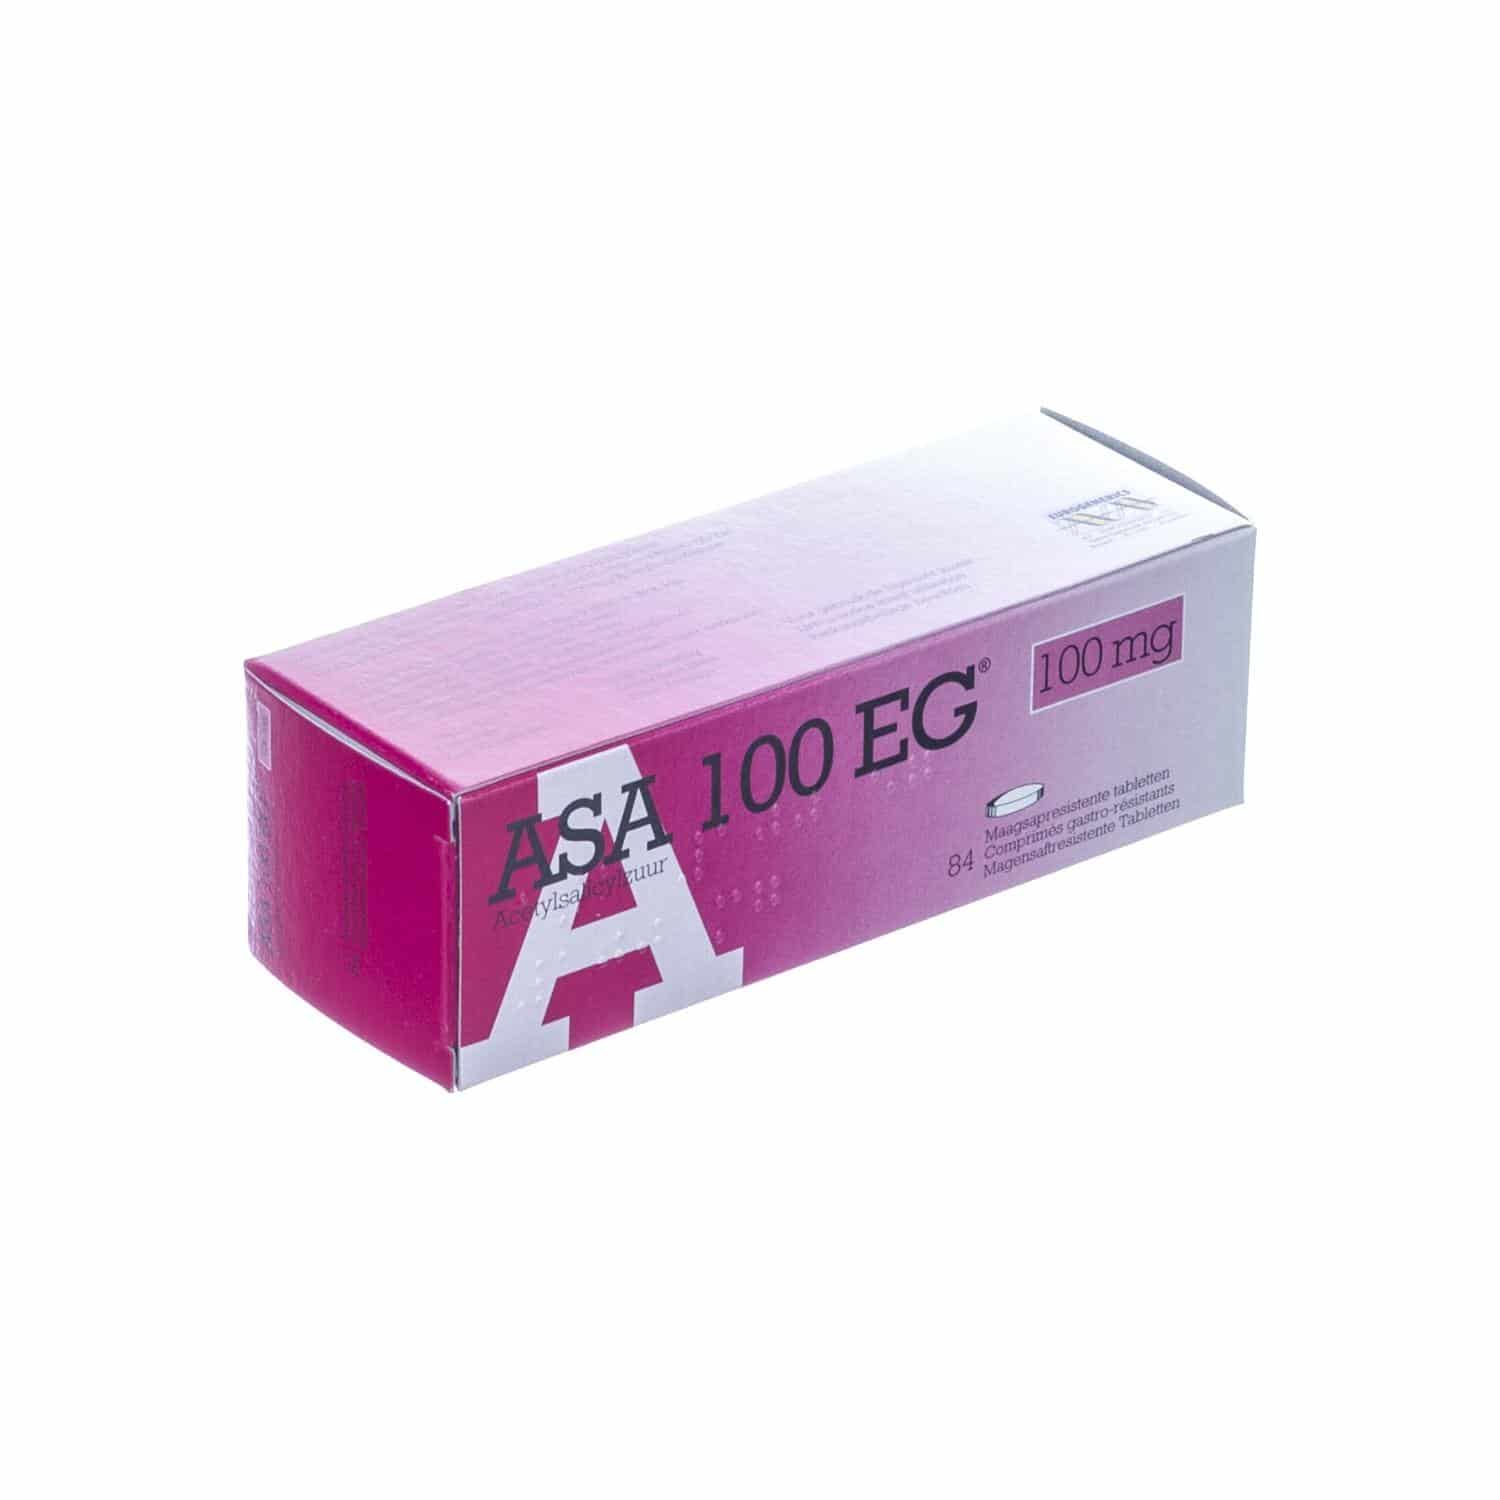 ASA 100 mg EG